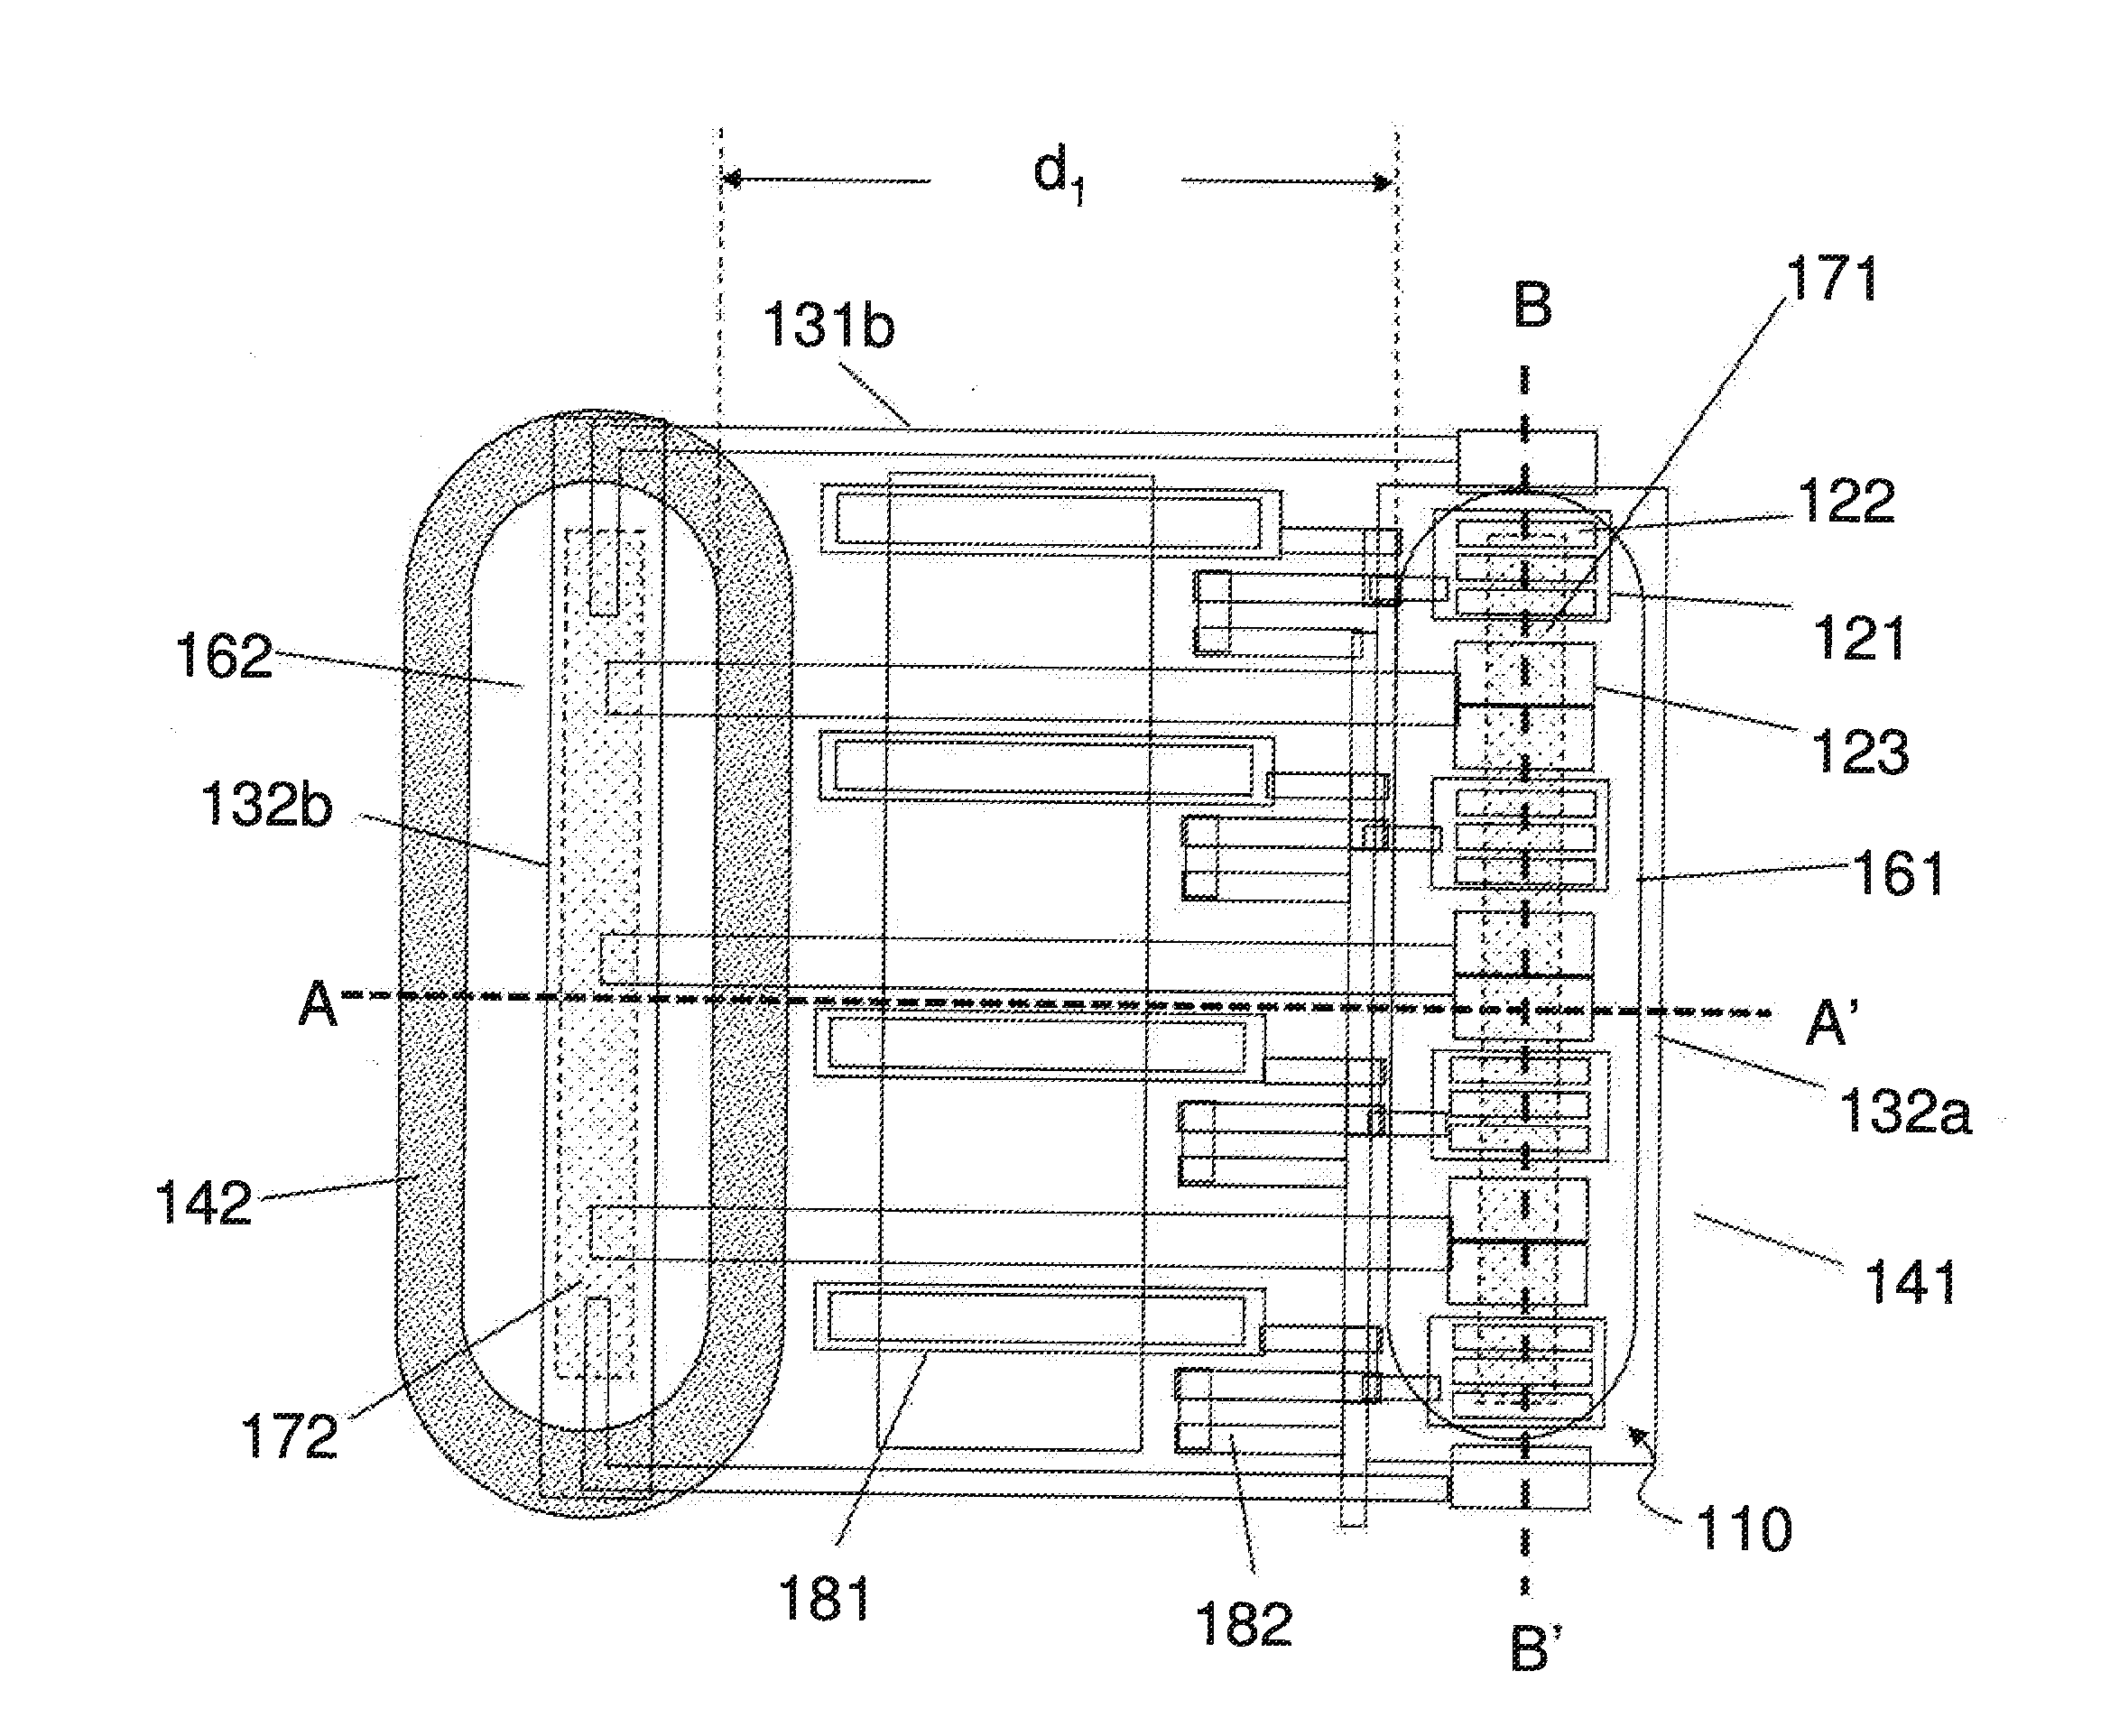 Layout Structure of Heterojunction Bipolar Transistors